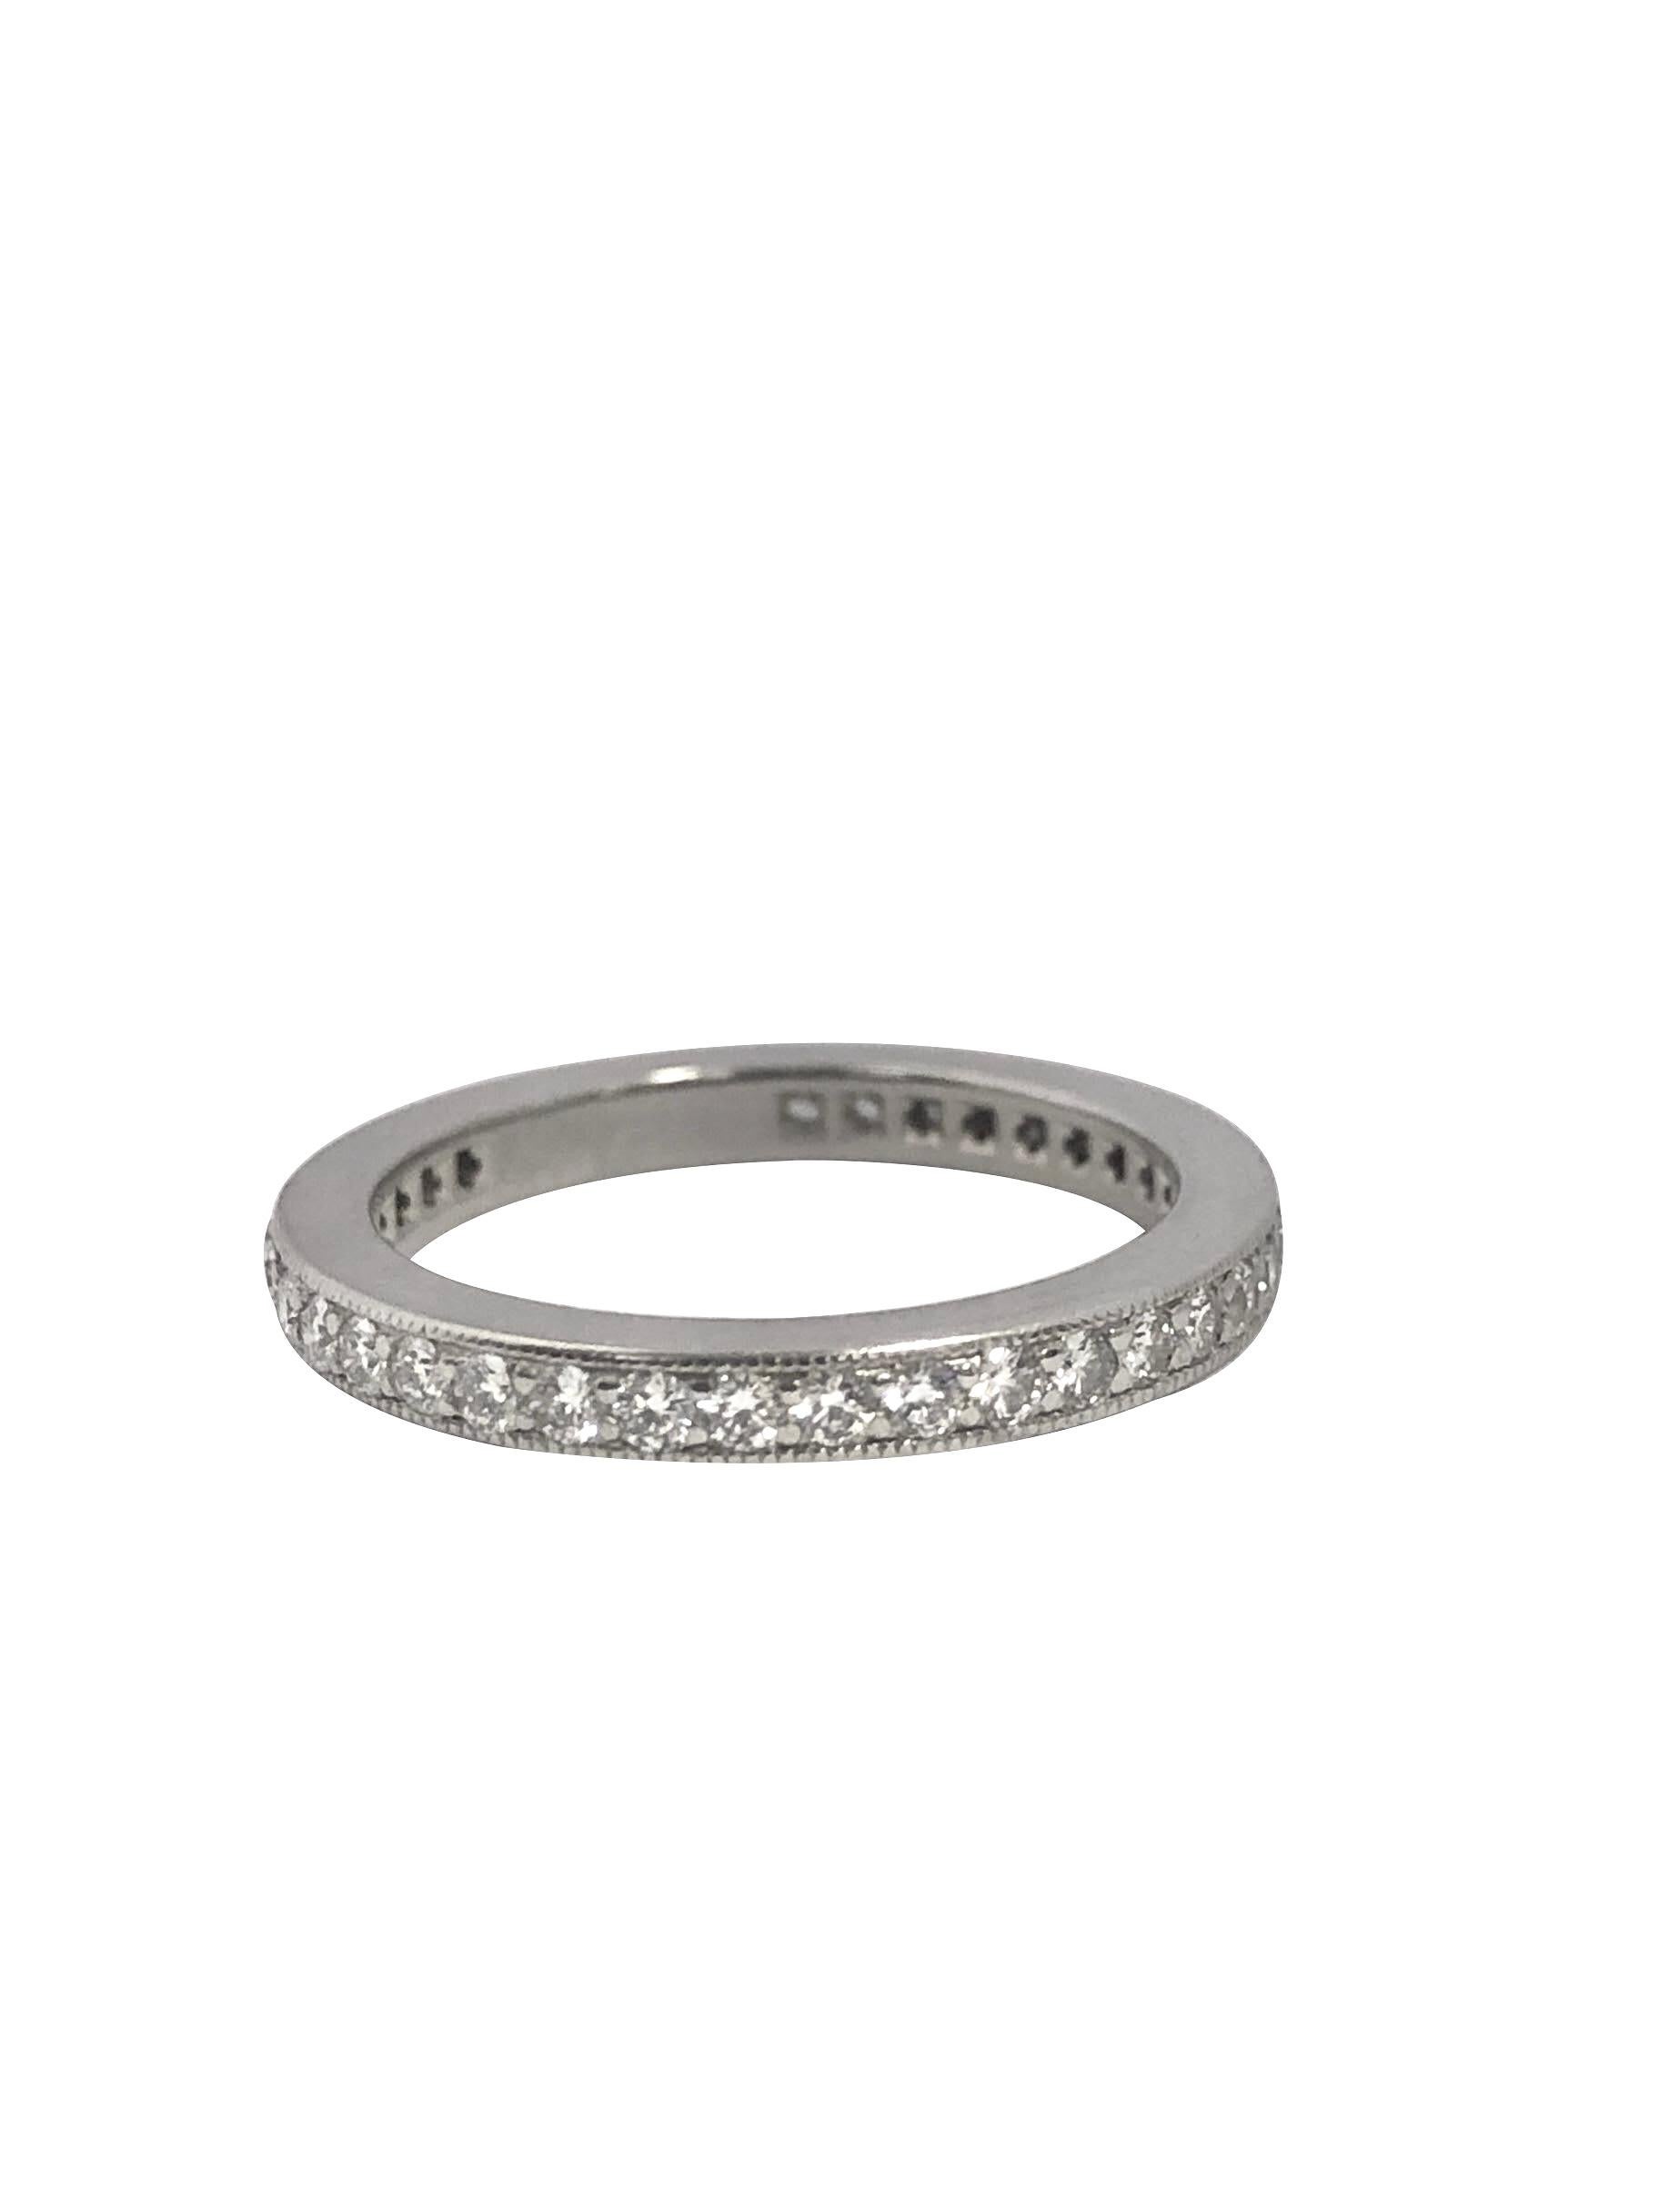 Round Cut Tiffany & Co. Platinum and Diamond Eternity Band Ring